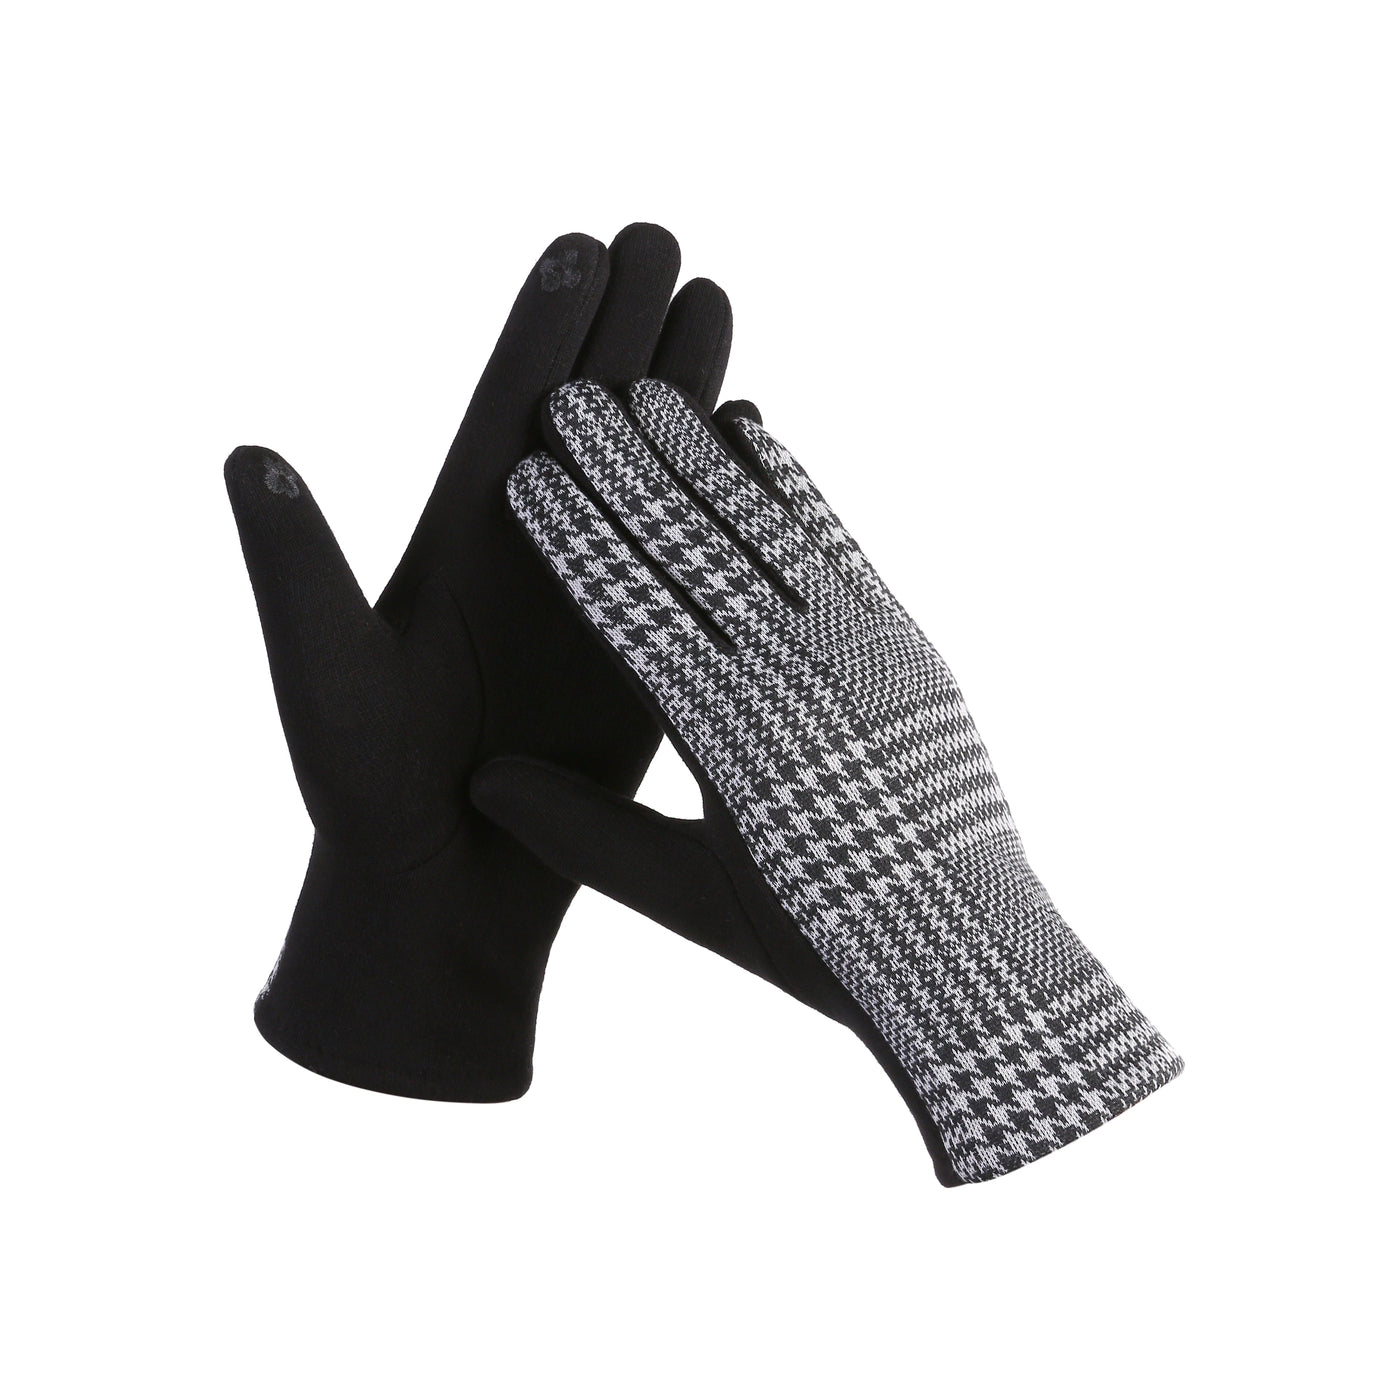 Women's Fashion Winter Gloves w/ Texting Finger - Black and White Plaid